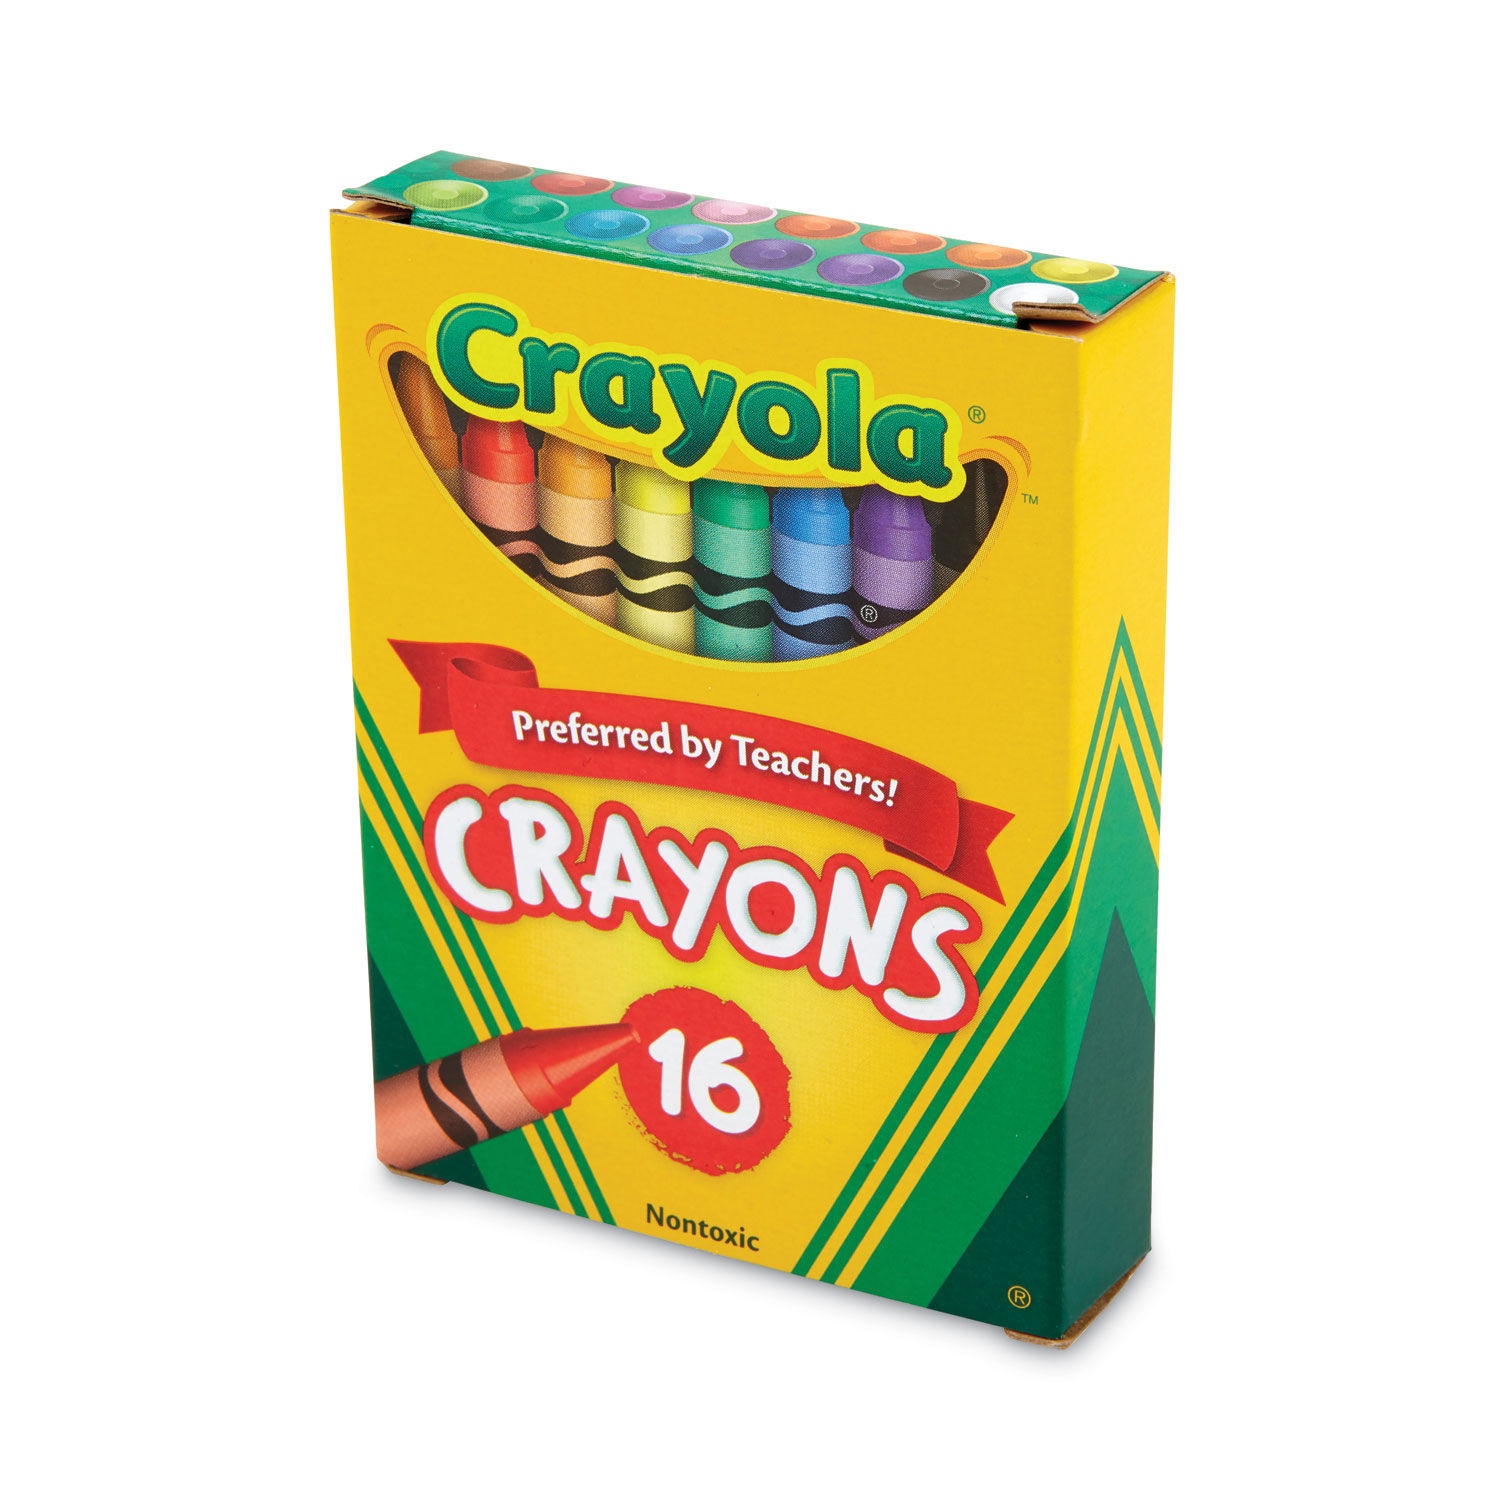 Crayola Bulk Crayons, Brown, Regular Size, 12 per box, Set of 12 boxes 